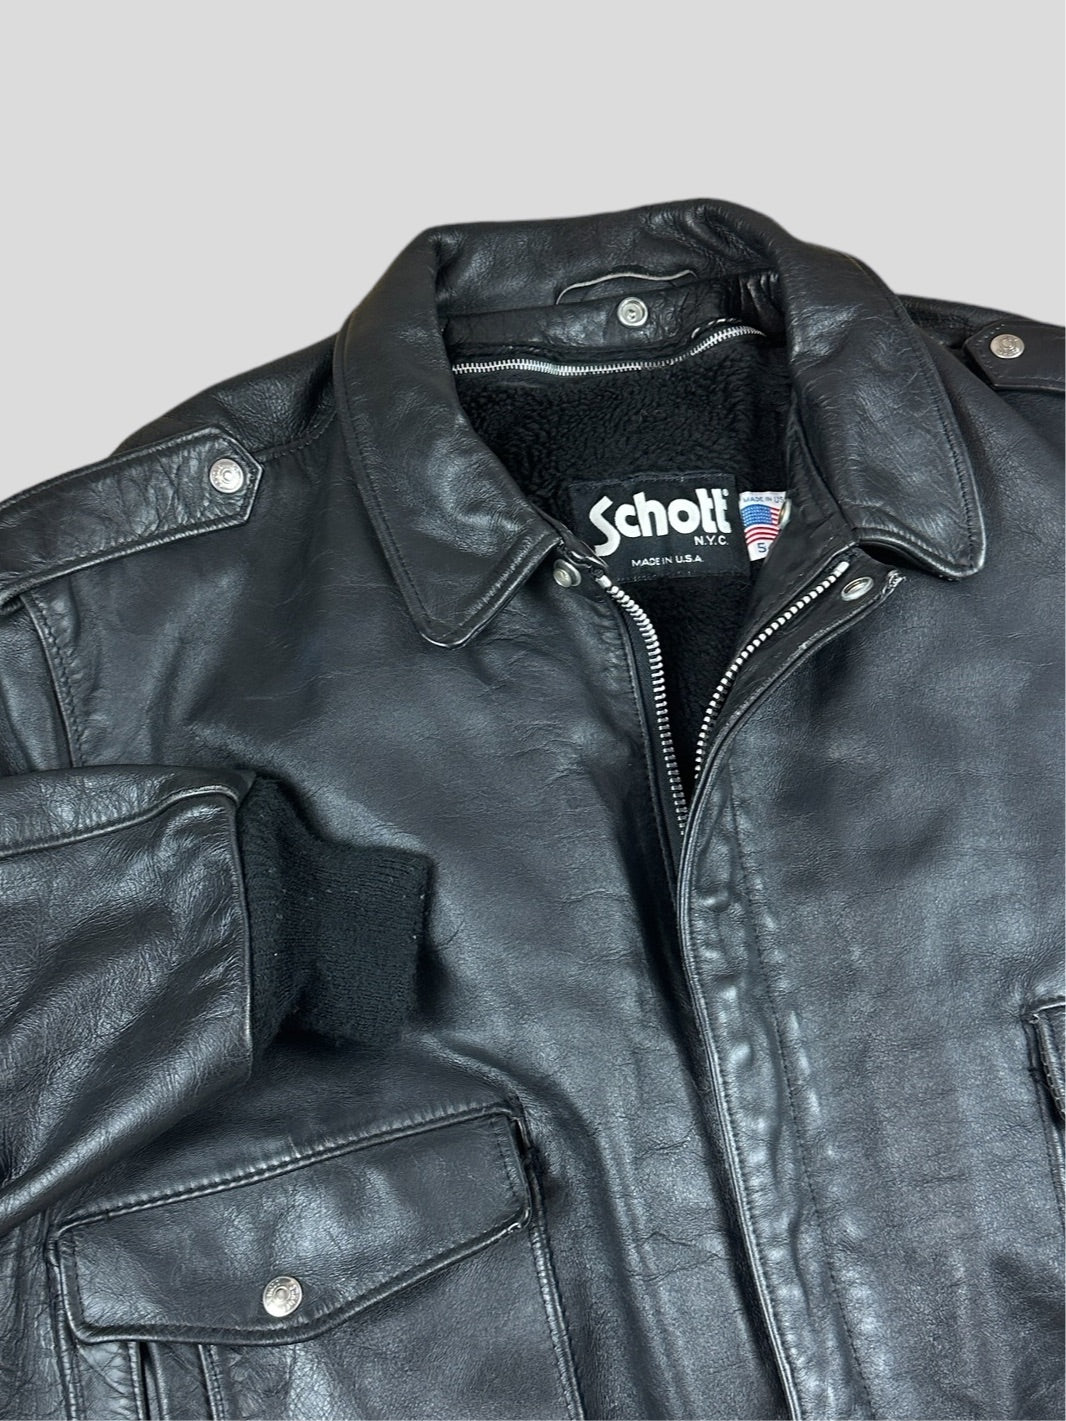 Schott leather